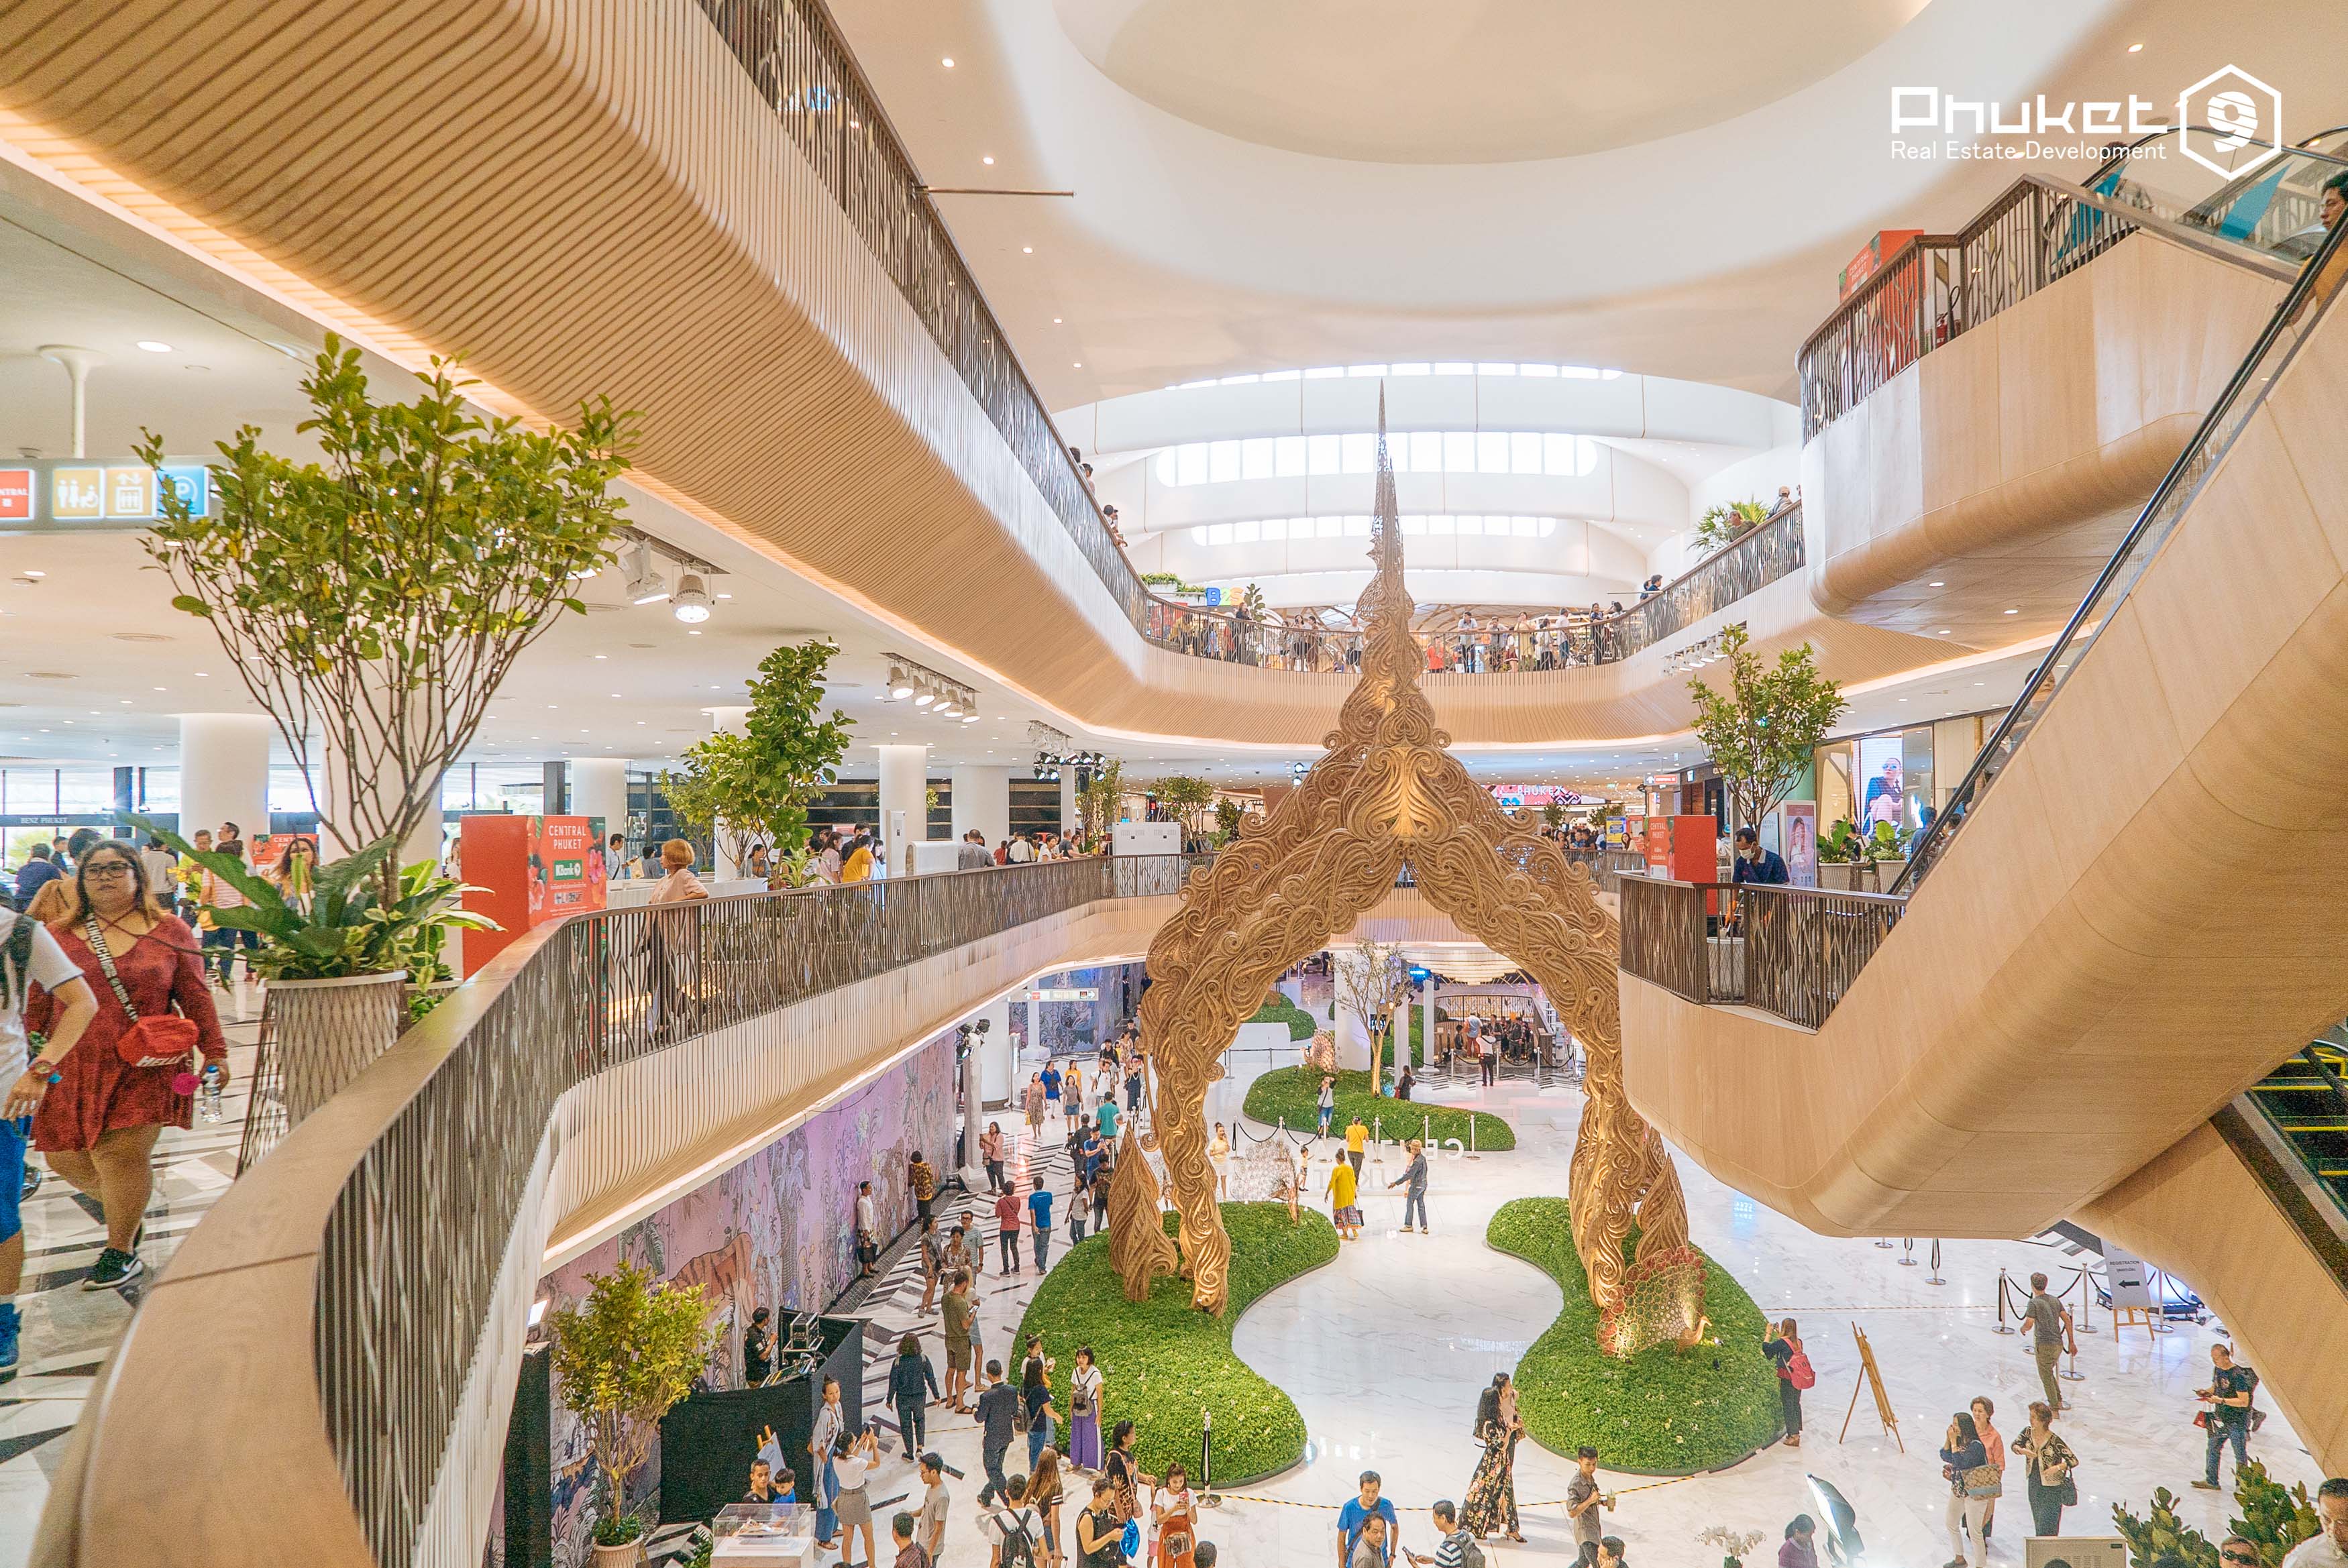 Central Phuket Floresta - New Shopping Mall Phuket Town 4K @Queenonstreet 